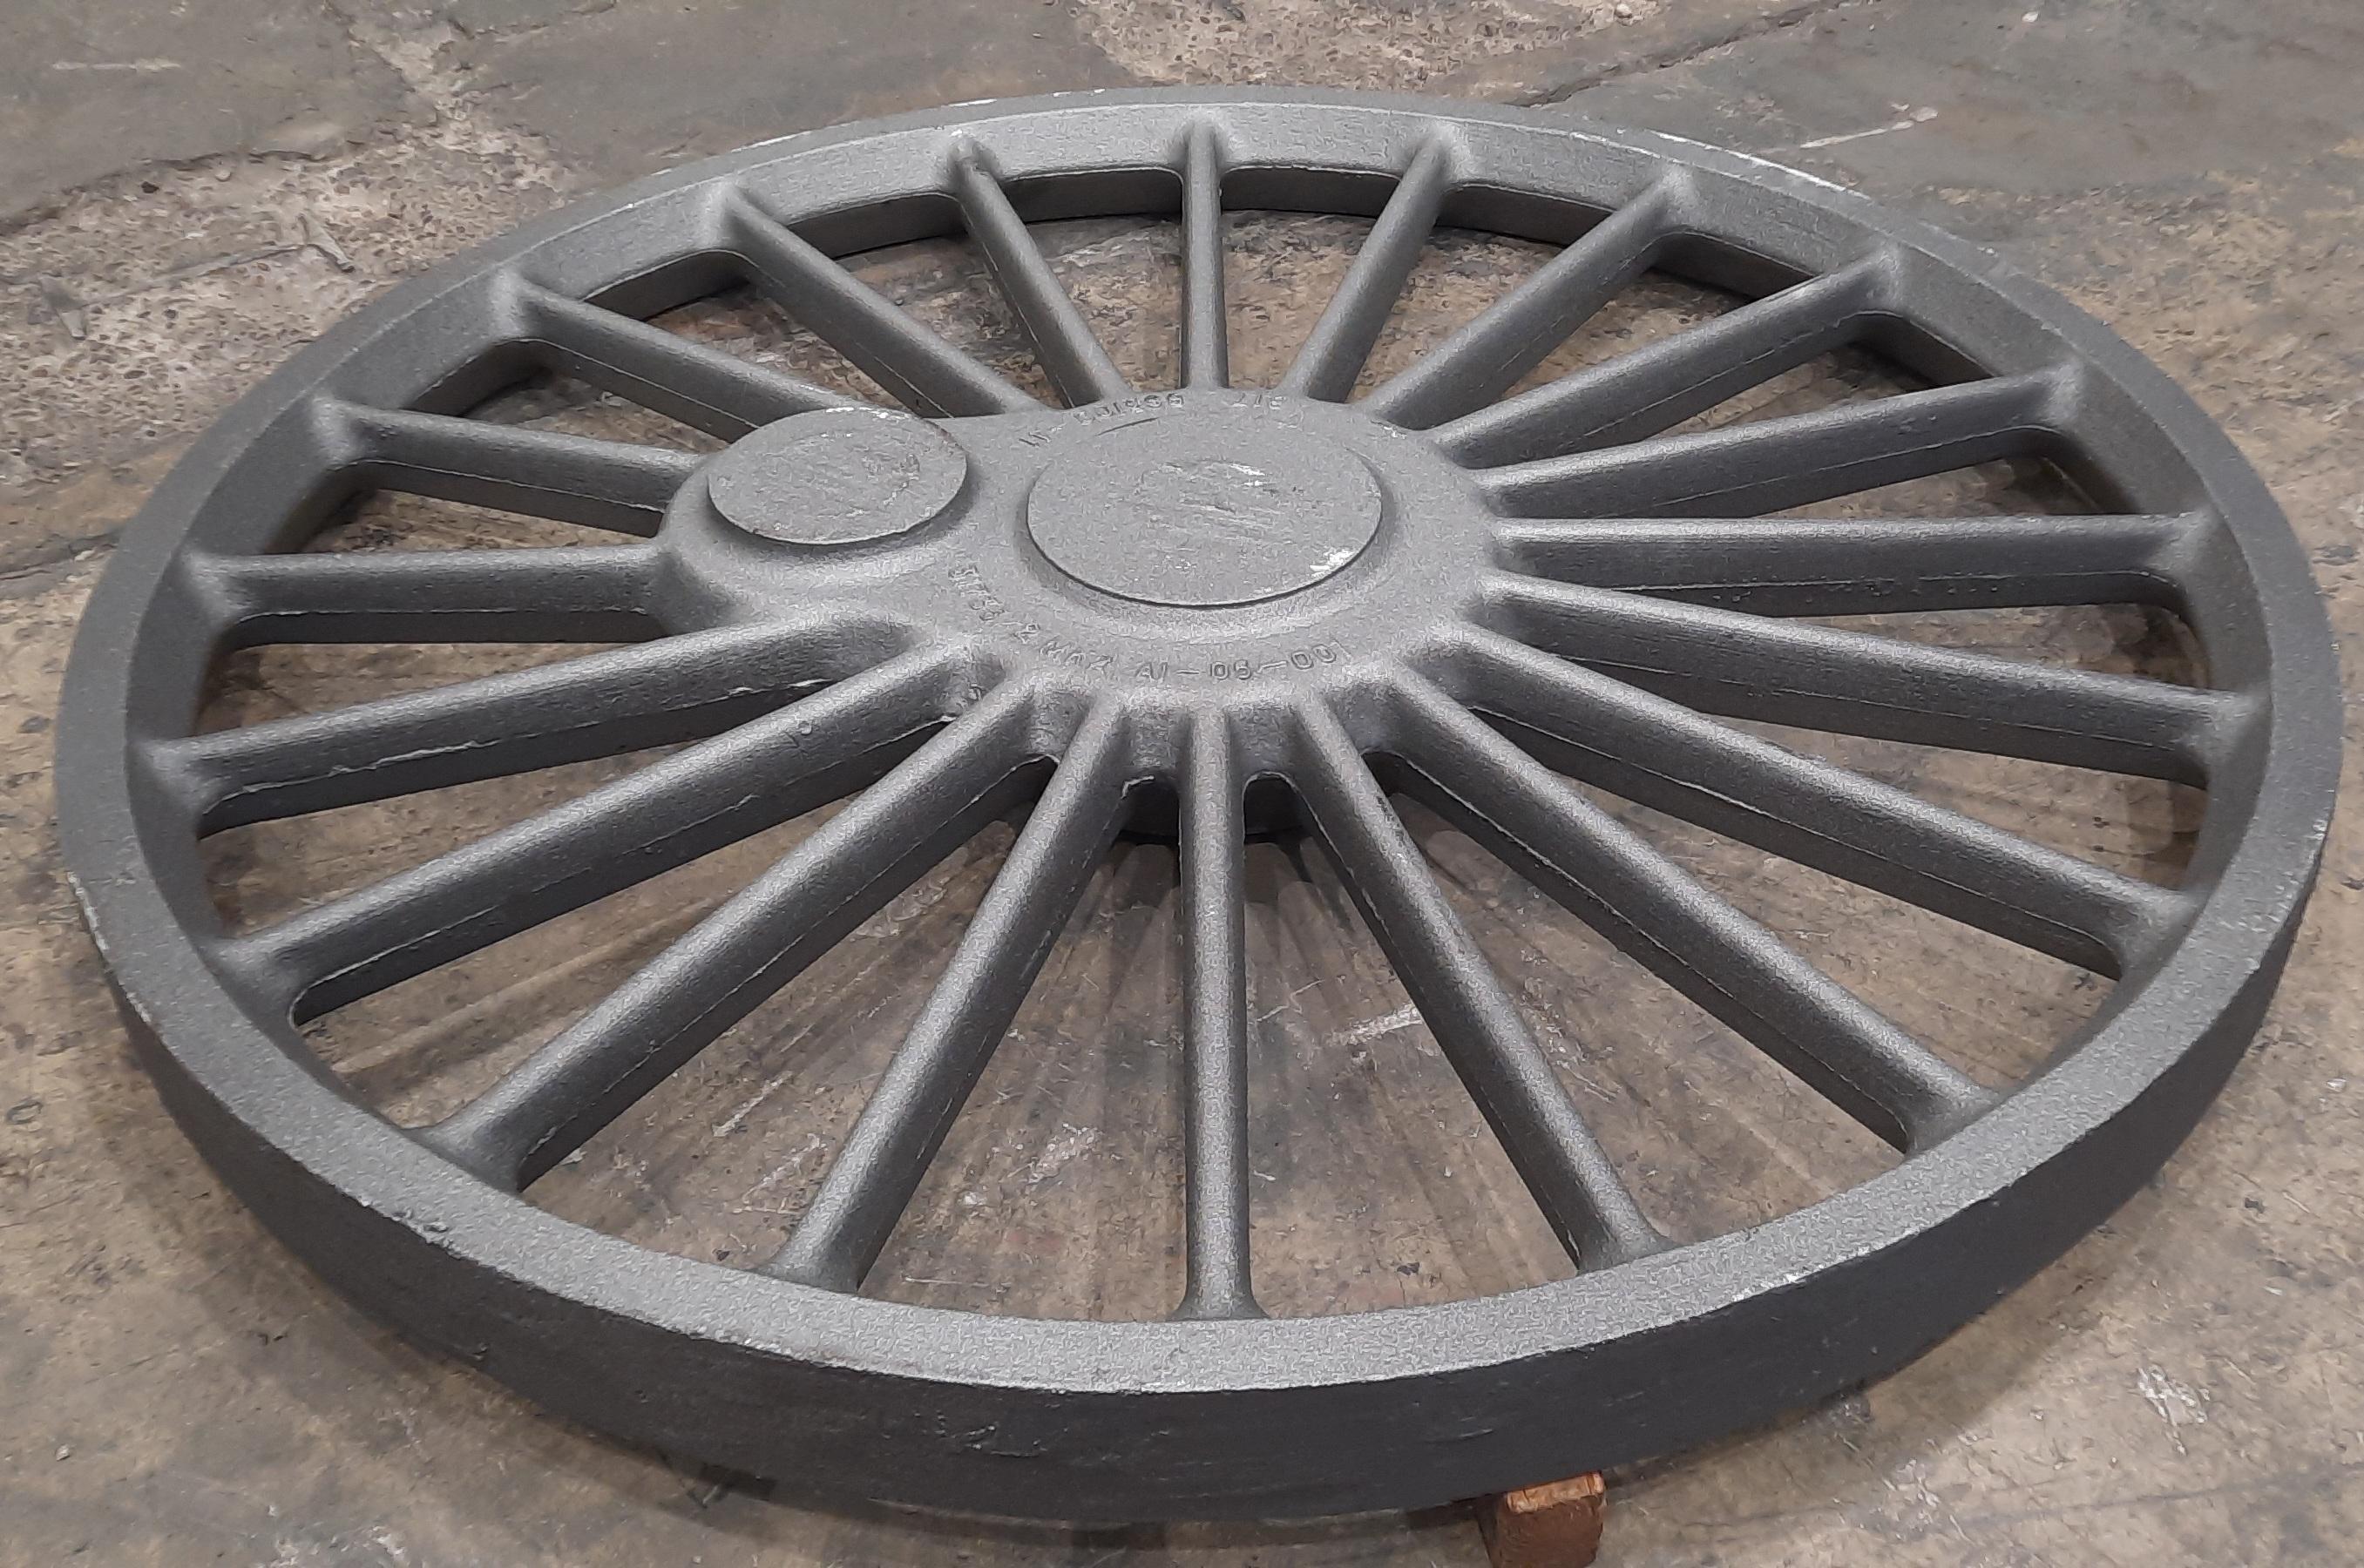 Finished cast wheel 310122 